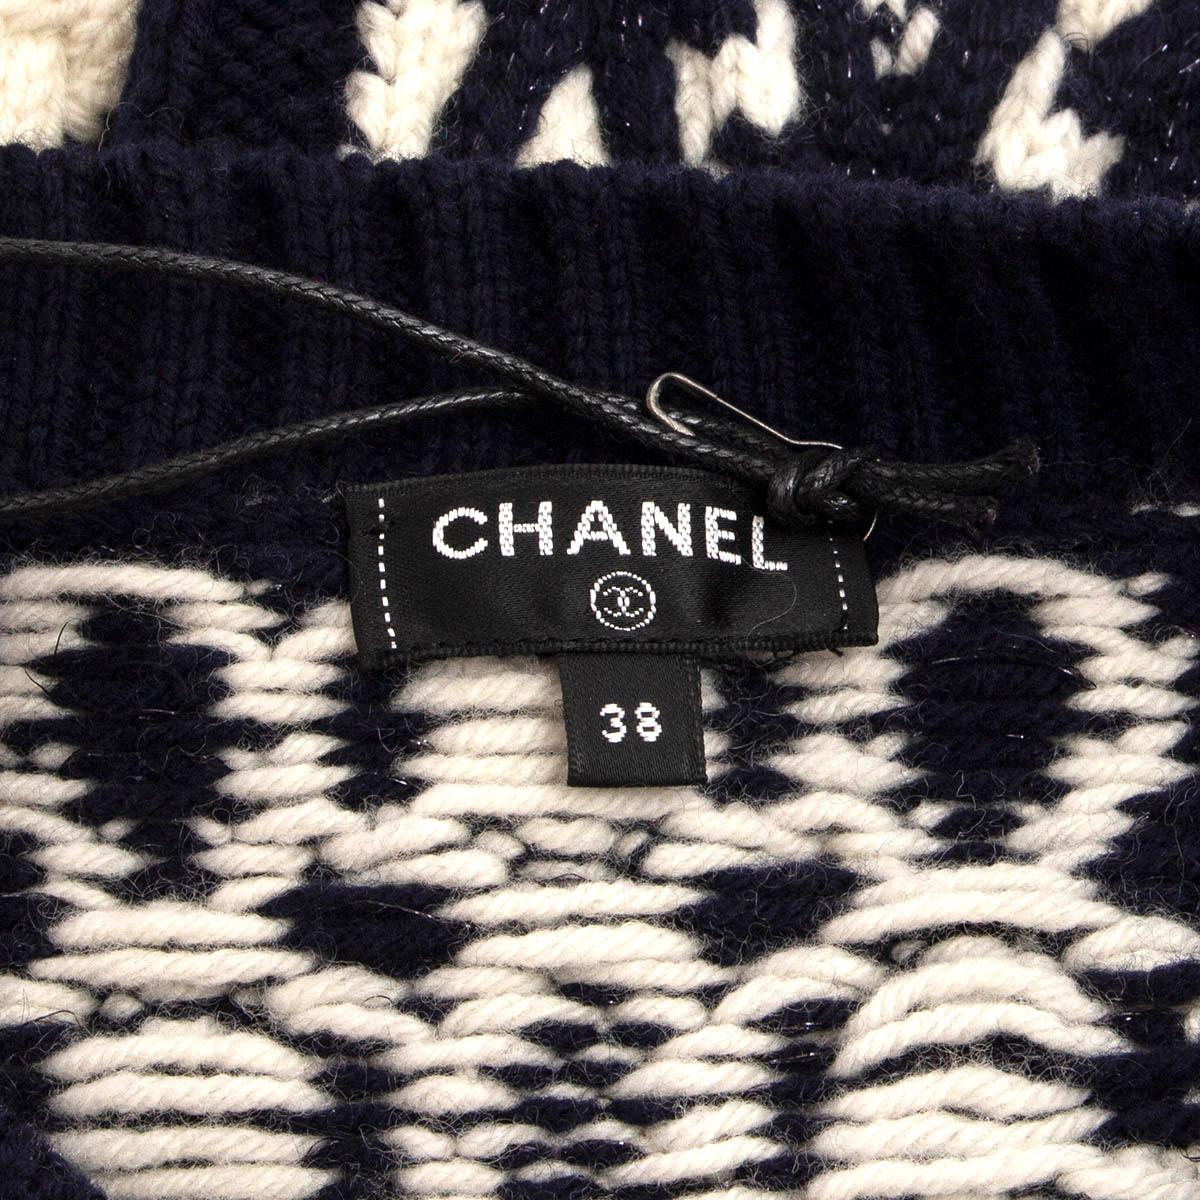 CHANEL navy blue & white wool blend 2018 18A HAMBURG CHUNKY KNIT Sweater 38 S 6